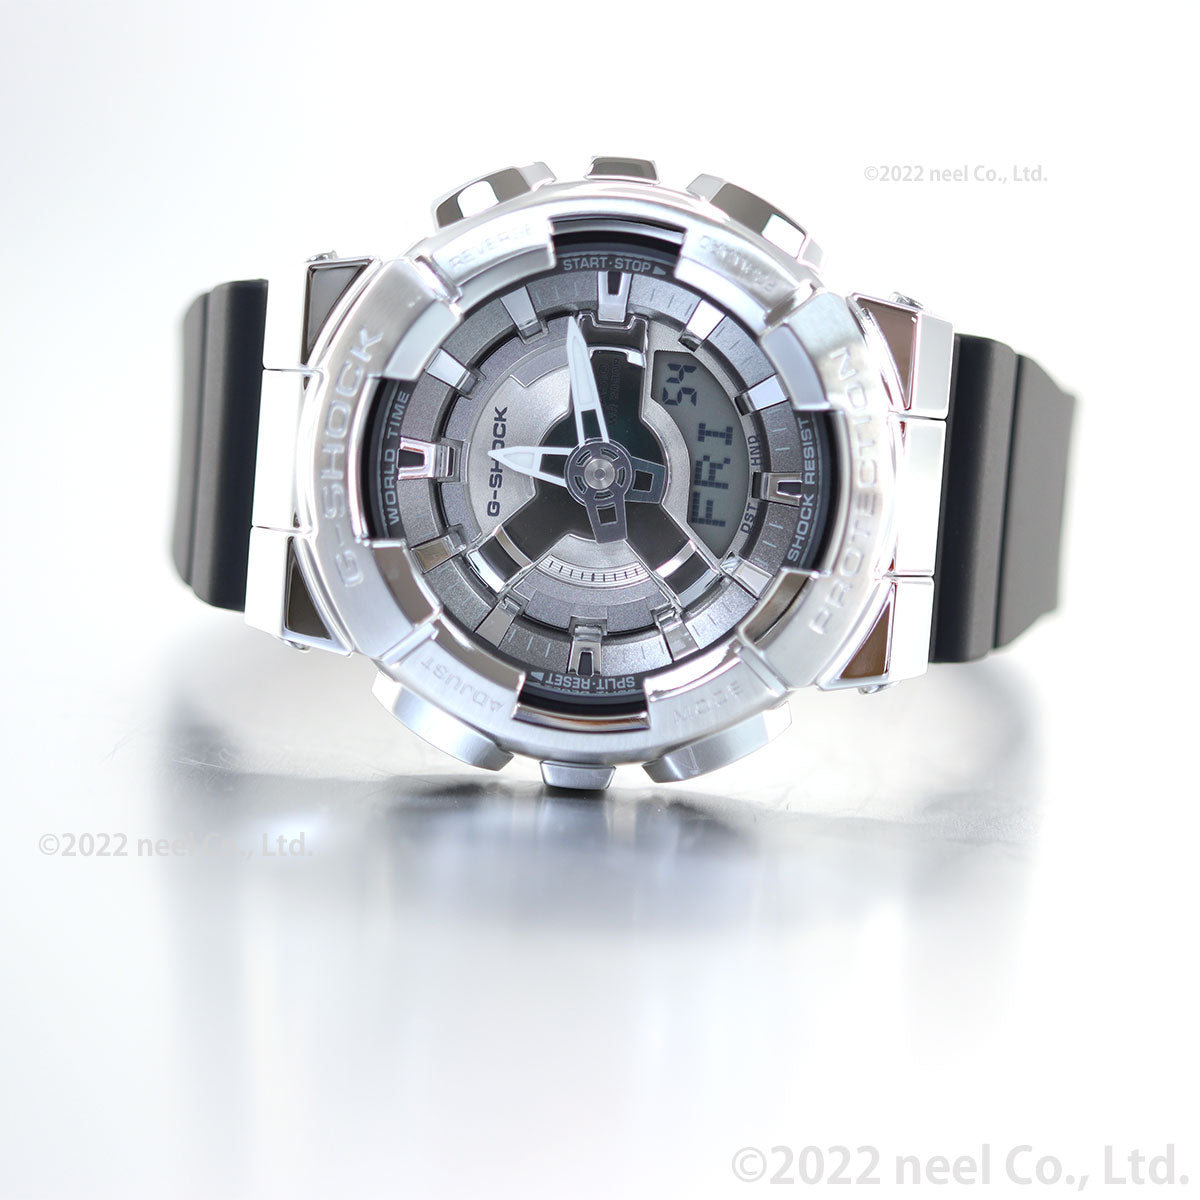 G-SHOCK カシオ Gショック CASIO アナデジ 腕時計 メンズ レディース GM-S110-1AJF メタルカバー GM-110 小型化・薄型化モデル